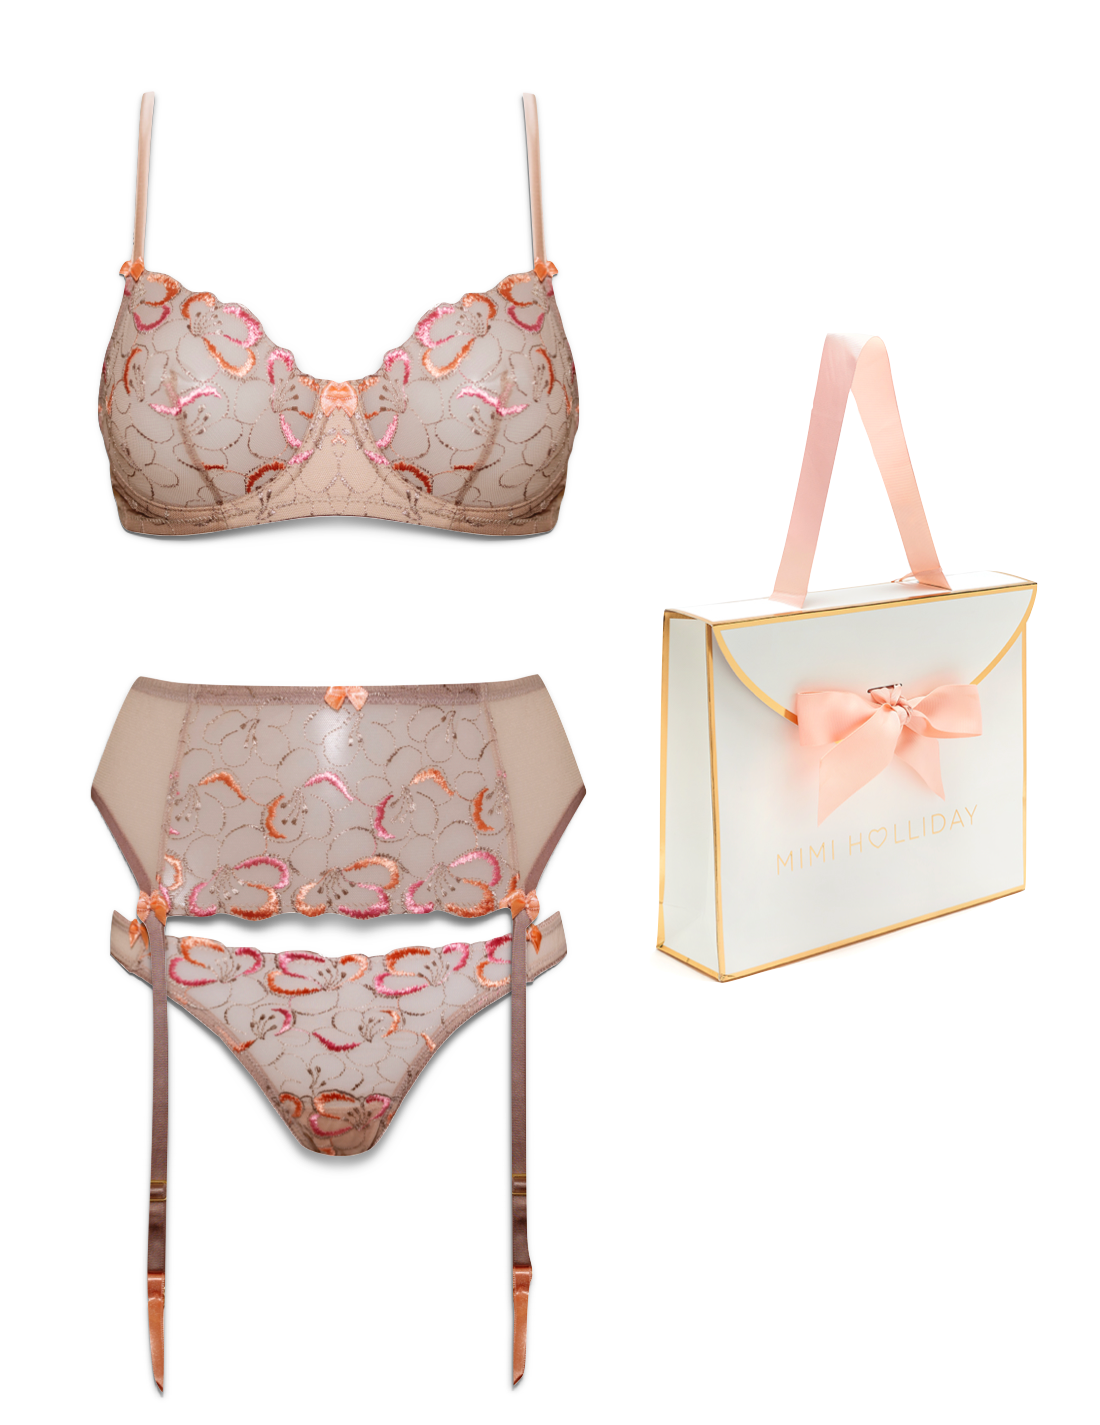 Amour Naturel Comfort Bra, Brief, Suspender & Bag Gift Set